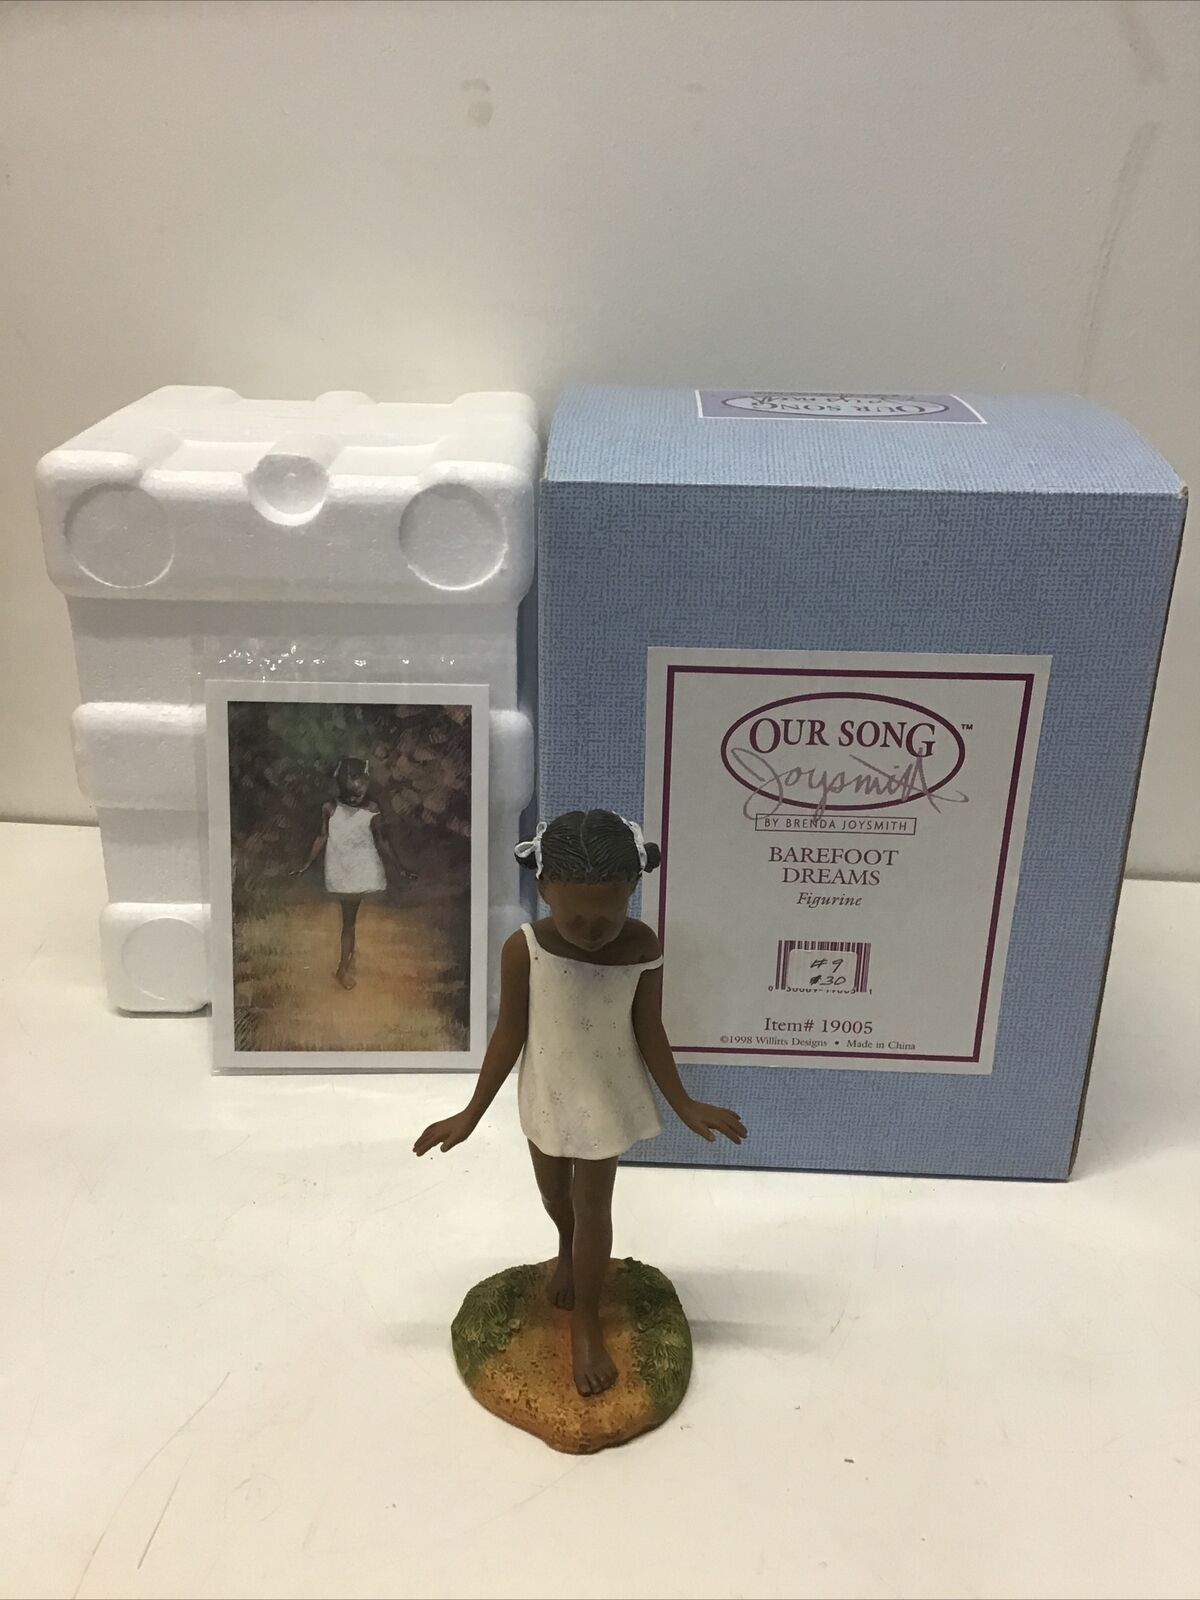 Our Song by Brenda Joysmith Barefoot Dreams Figurine #9 /Original Box Item#19005